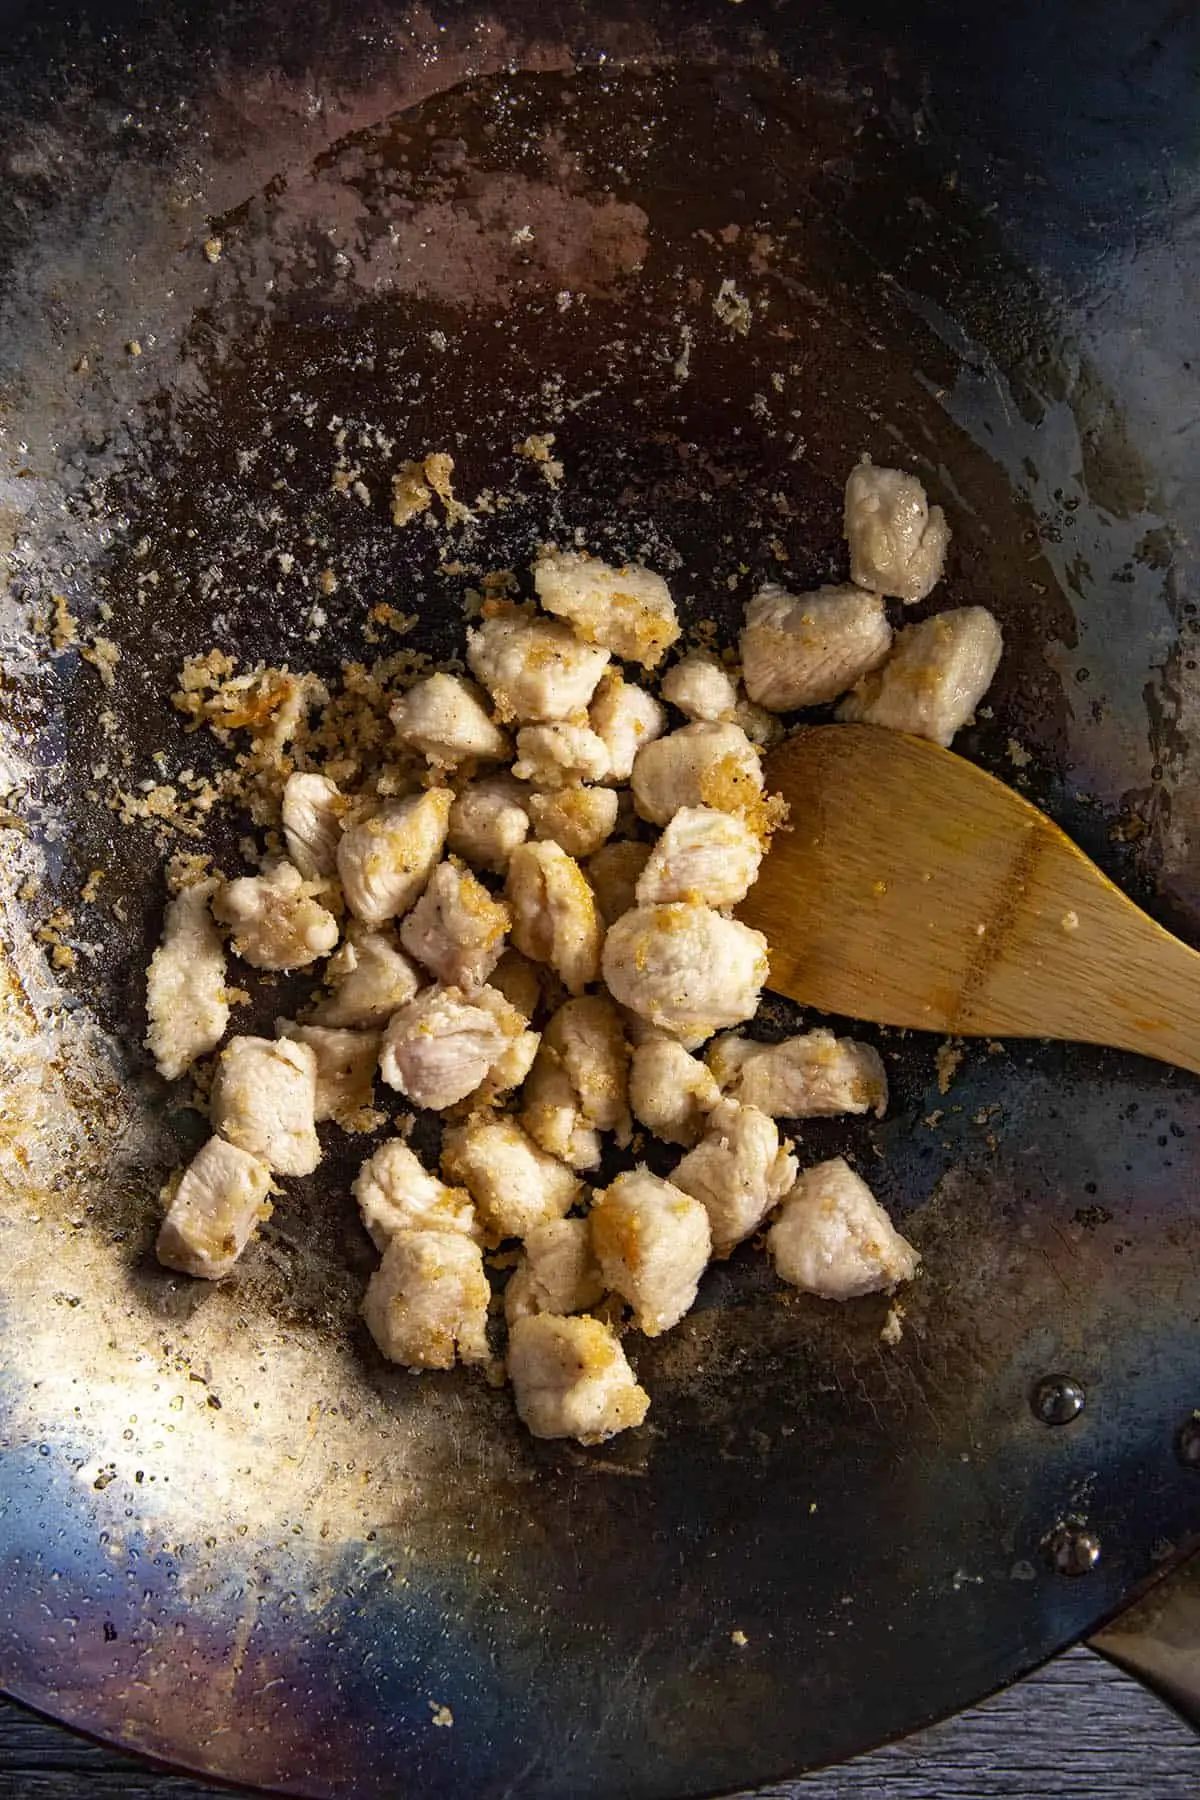 Stir frying the chicken in the wok to make General Tsos Chicken.